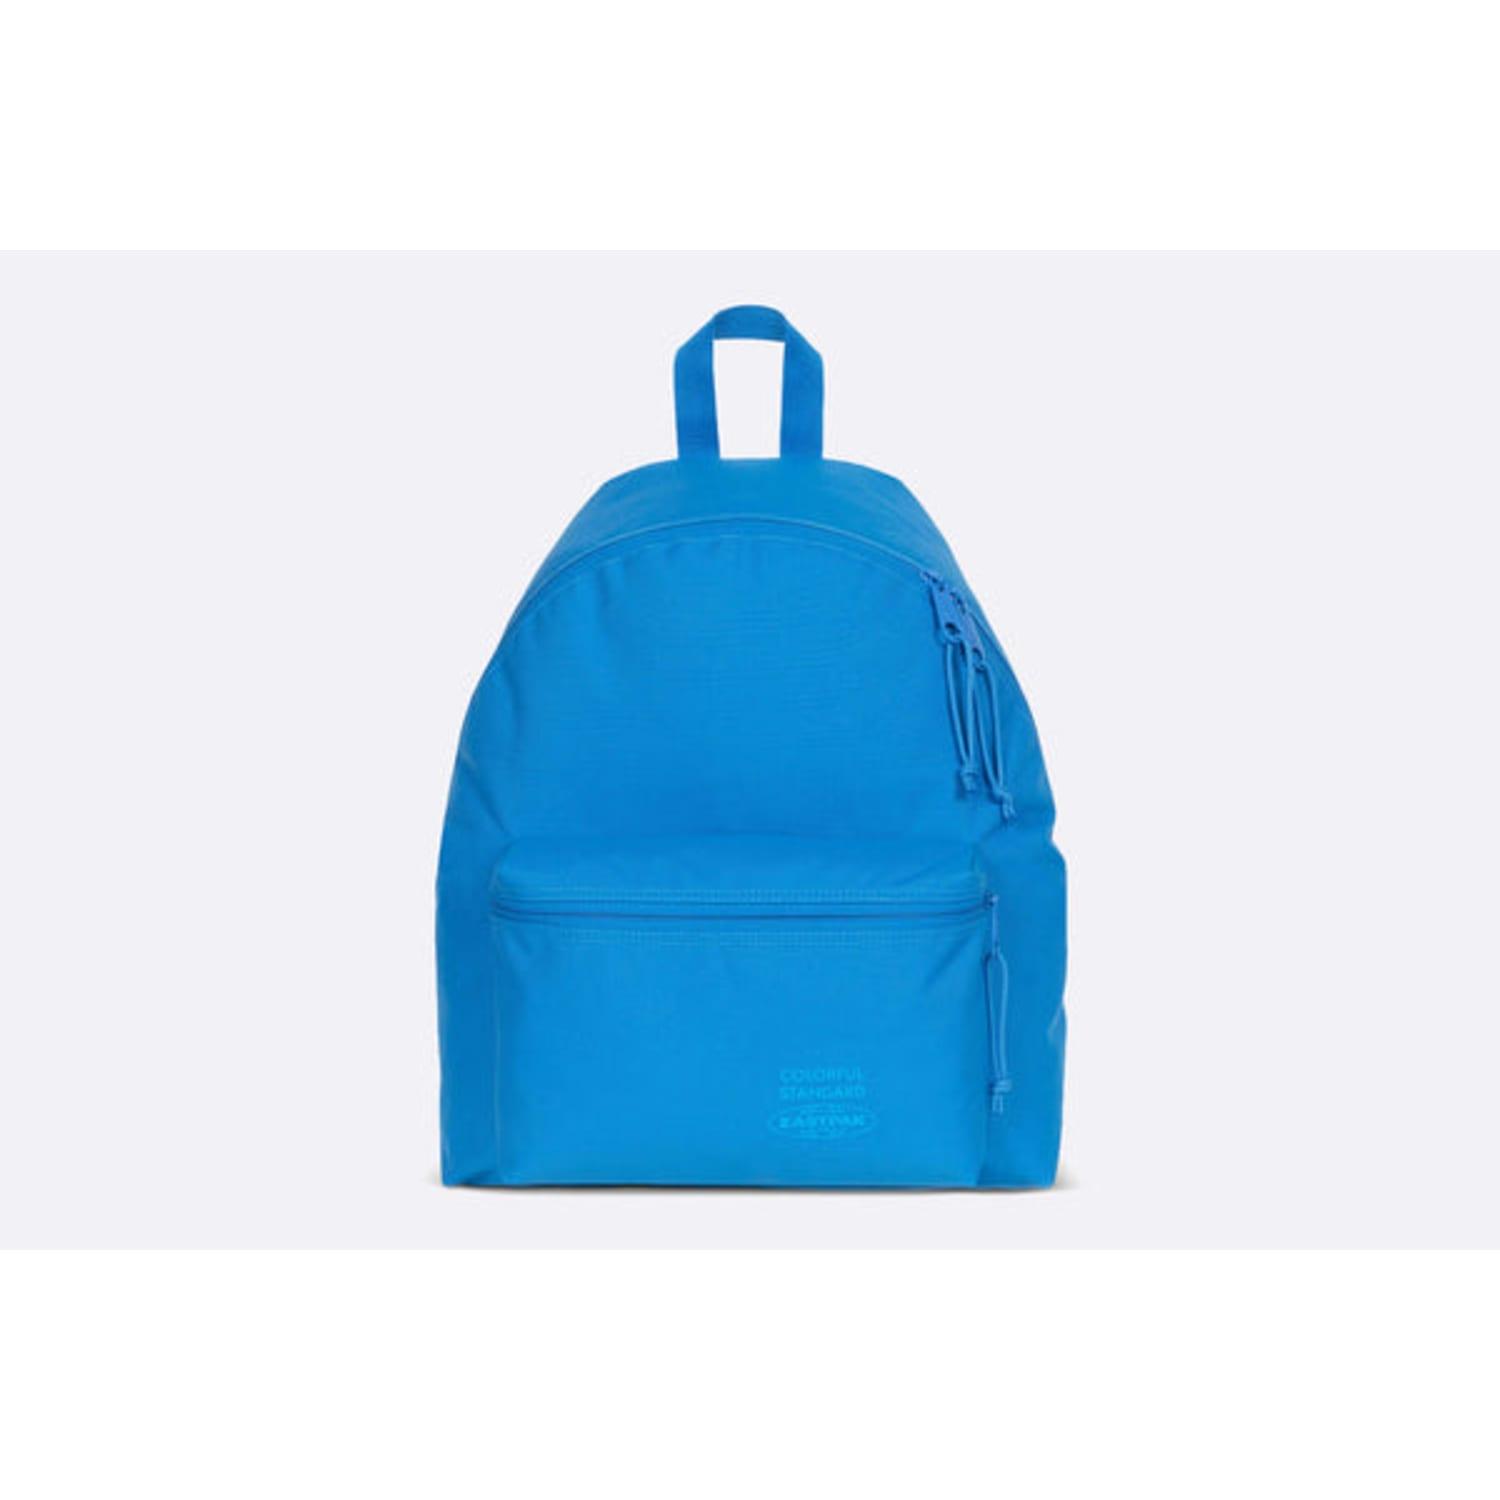 Eastpak Pacific Blue Day Pakr Colorful Standard Backpack for Men